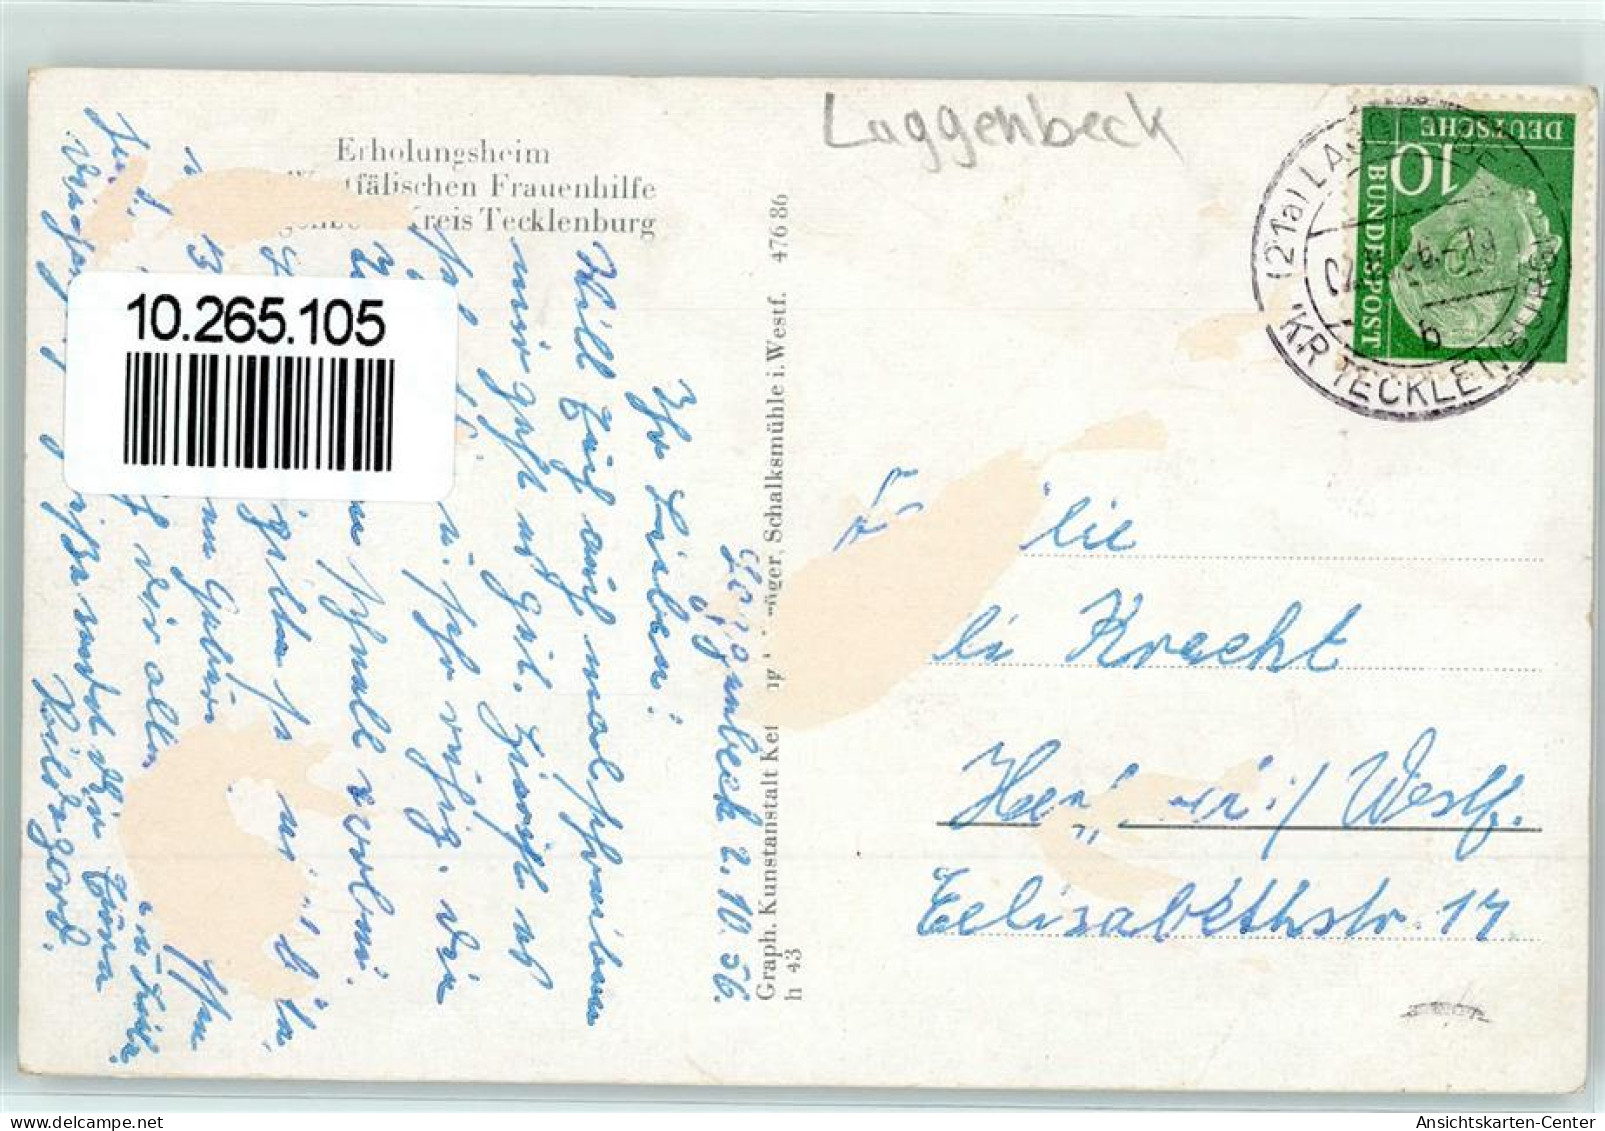 10265105 - Laggenbeck - Ibbenbüren